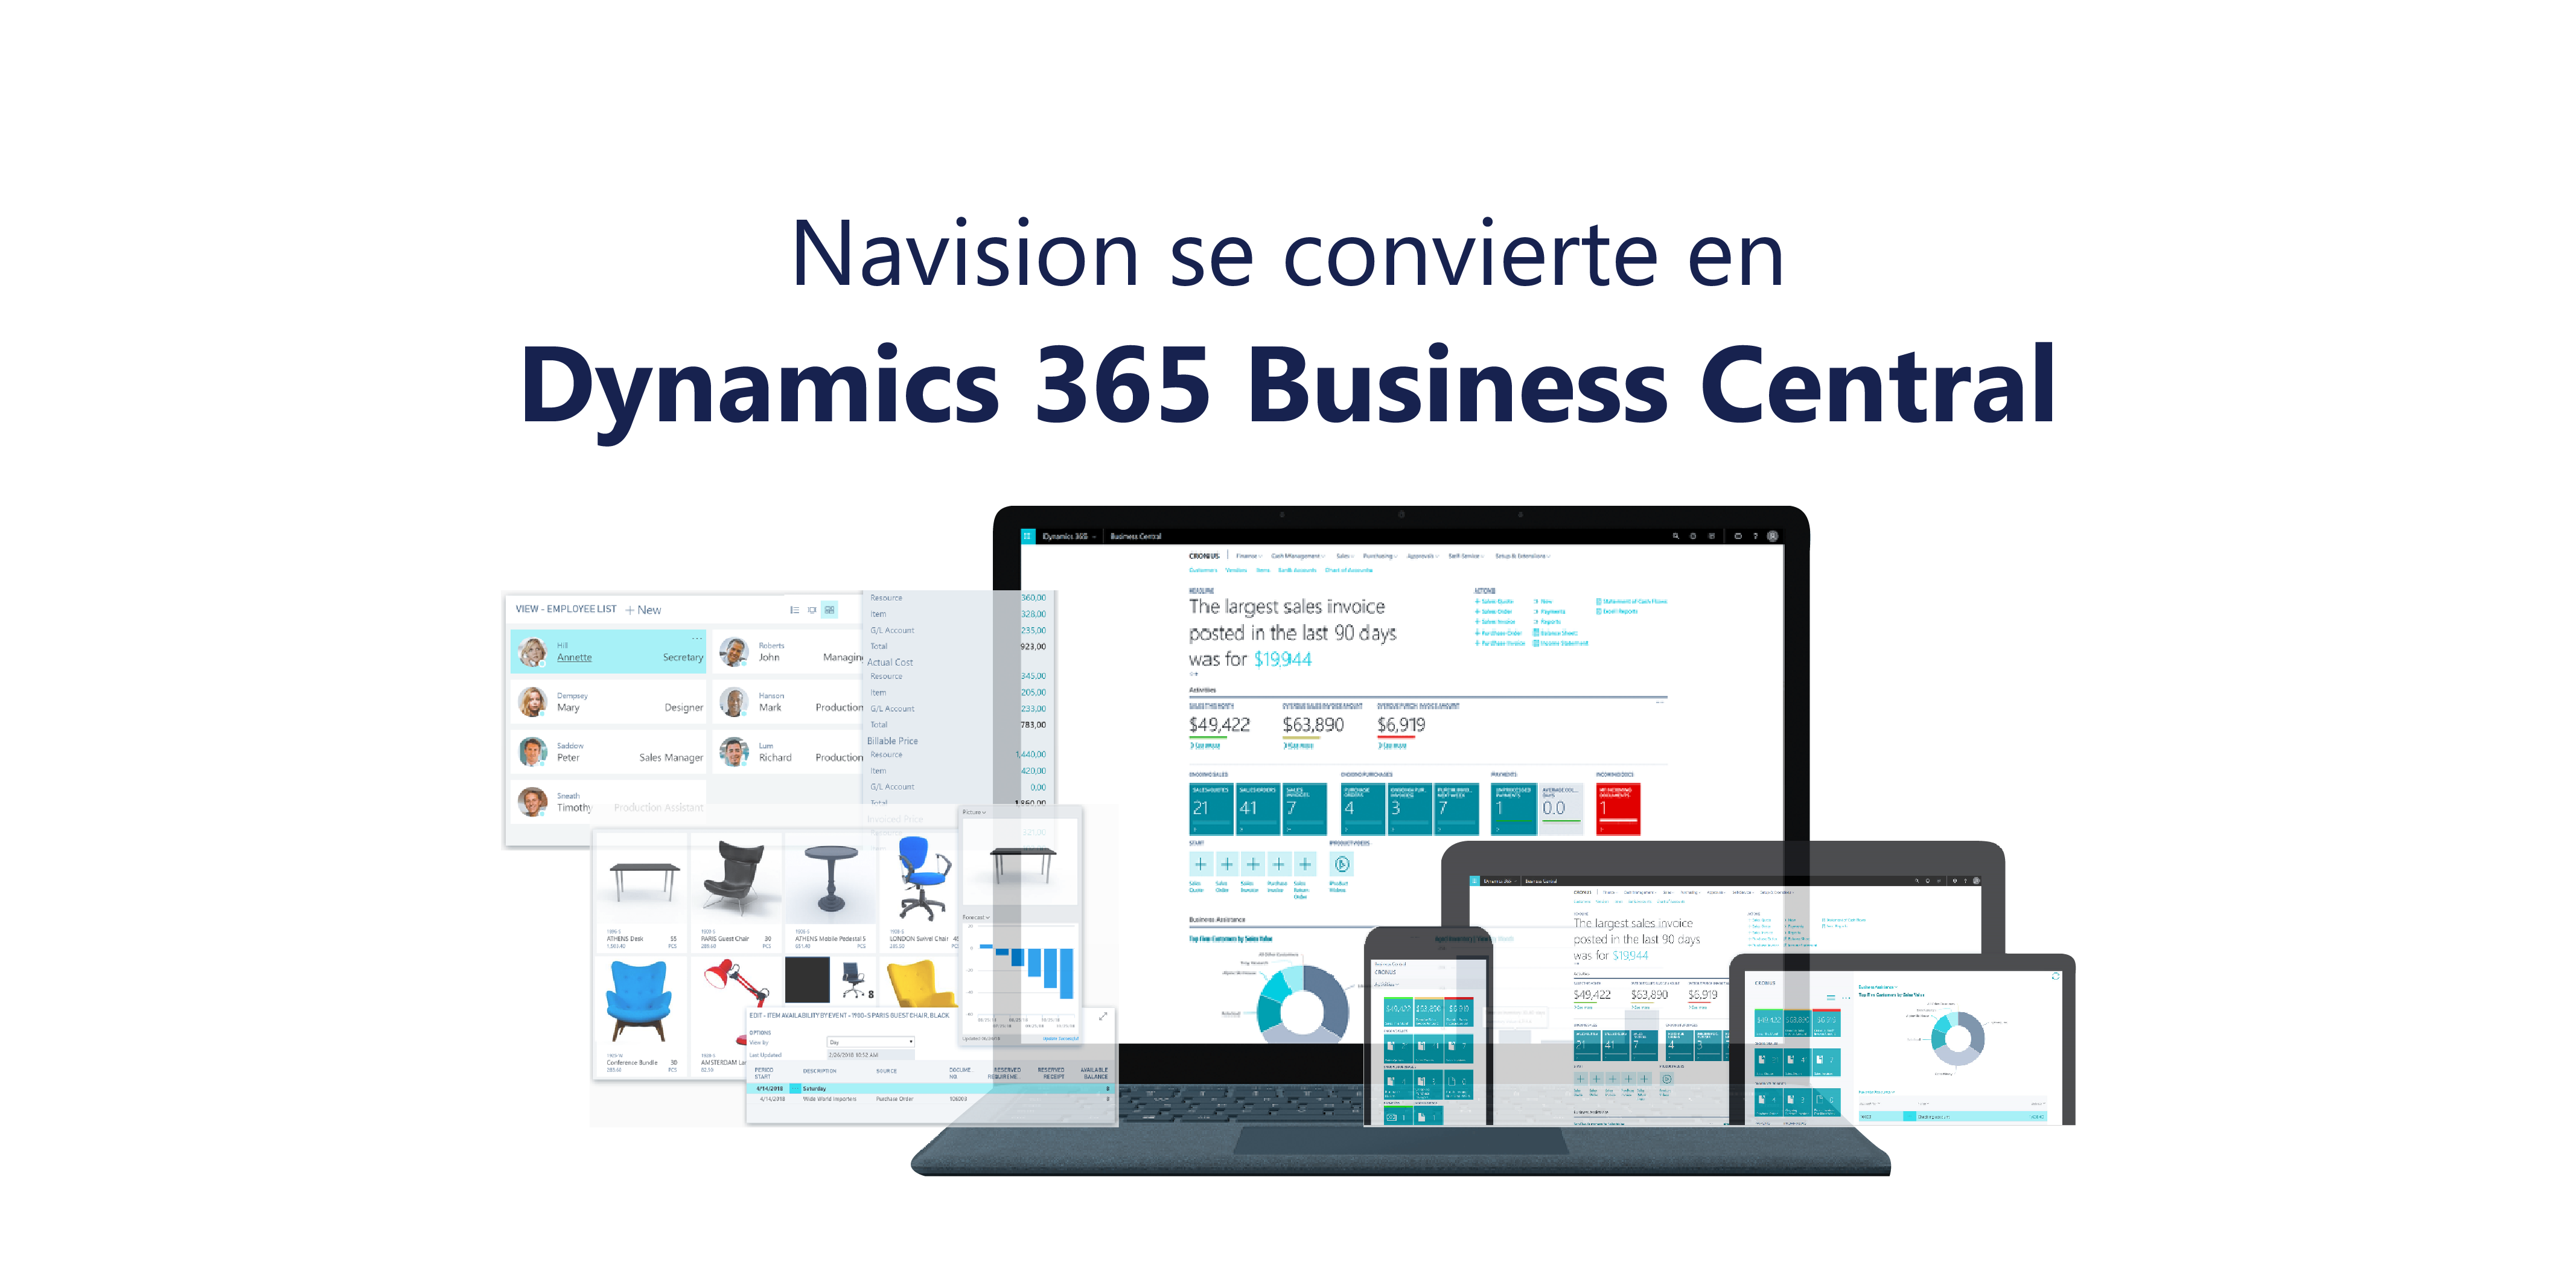 Navision se convierte en Dynamics 365 Business Central Grupo Dynasoft